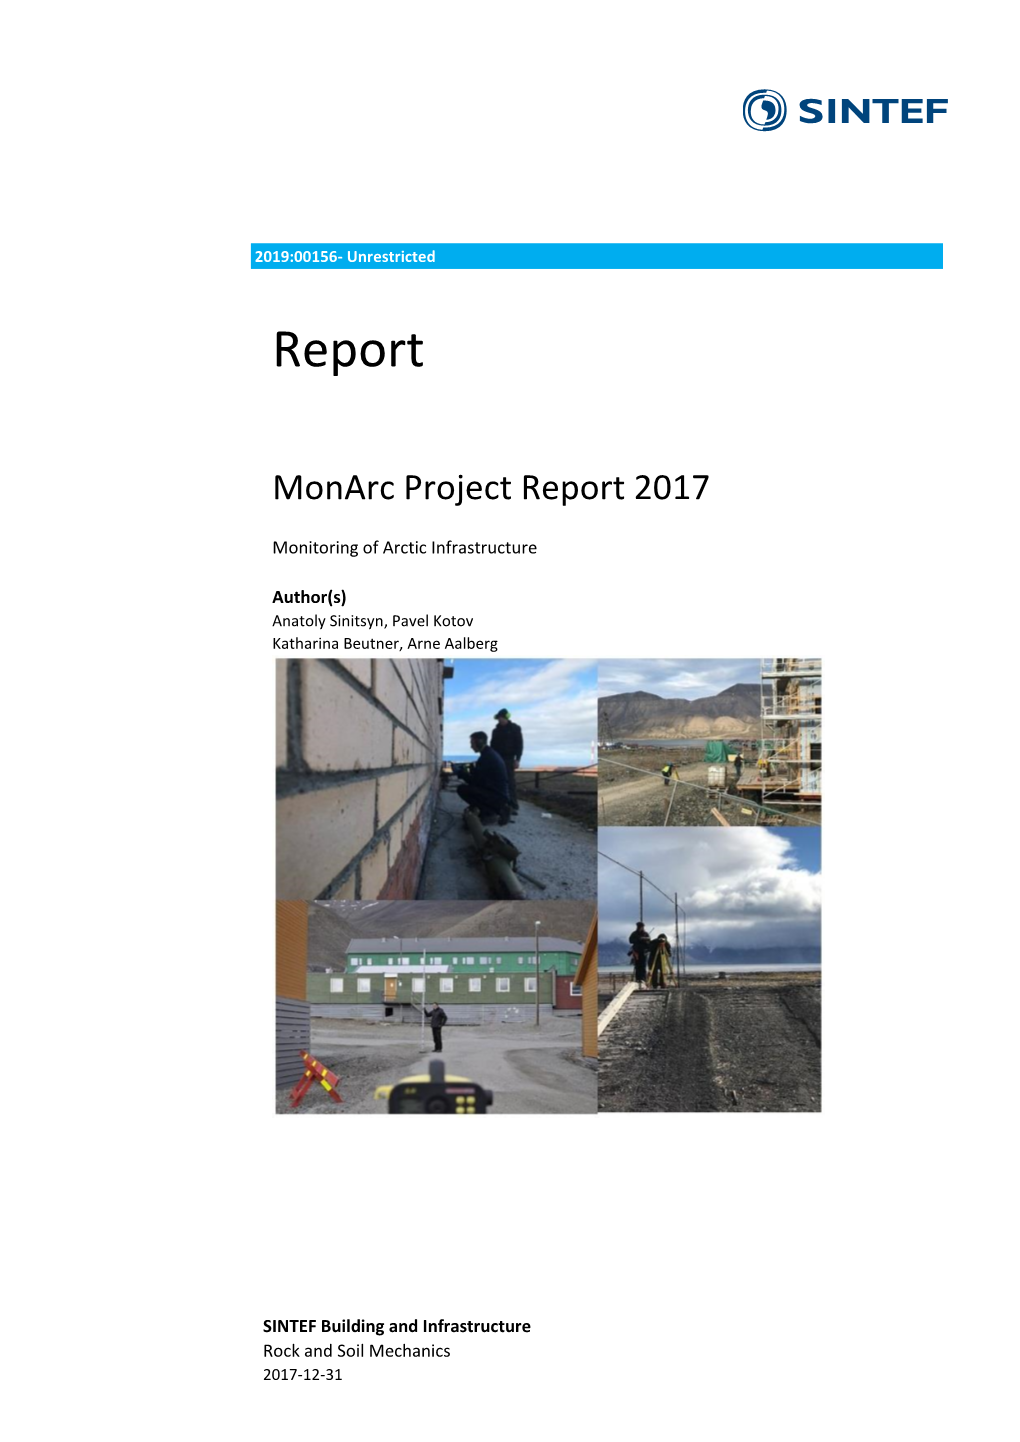 Monarc Project Report 2017